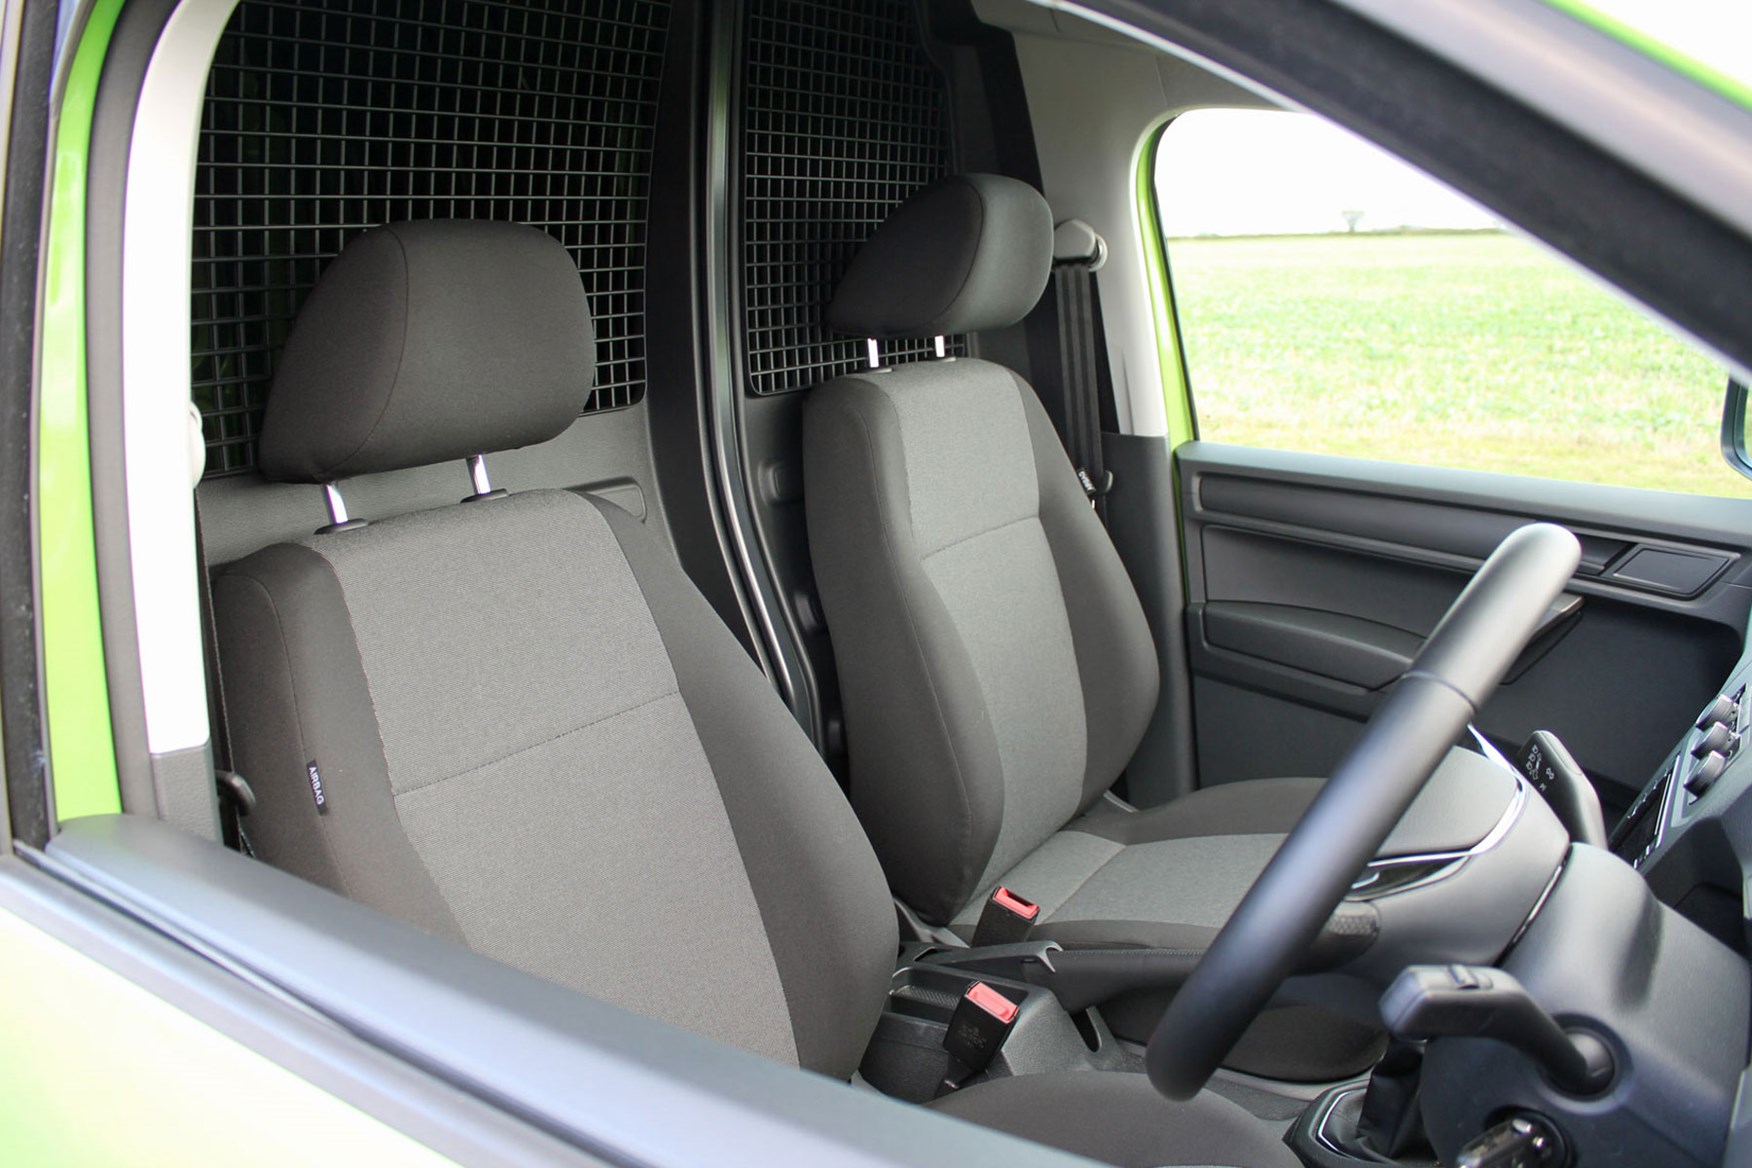 Volkswagen Caddy 1.6 TDI Black Edition – Long Term Test Month 2